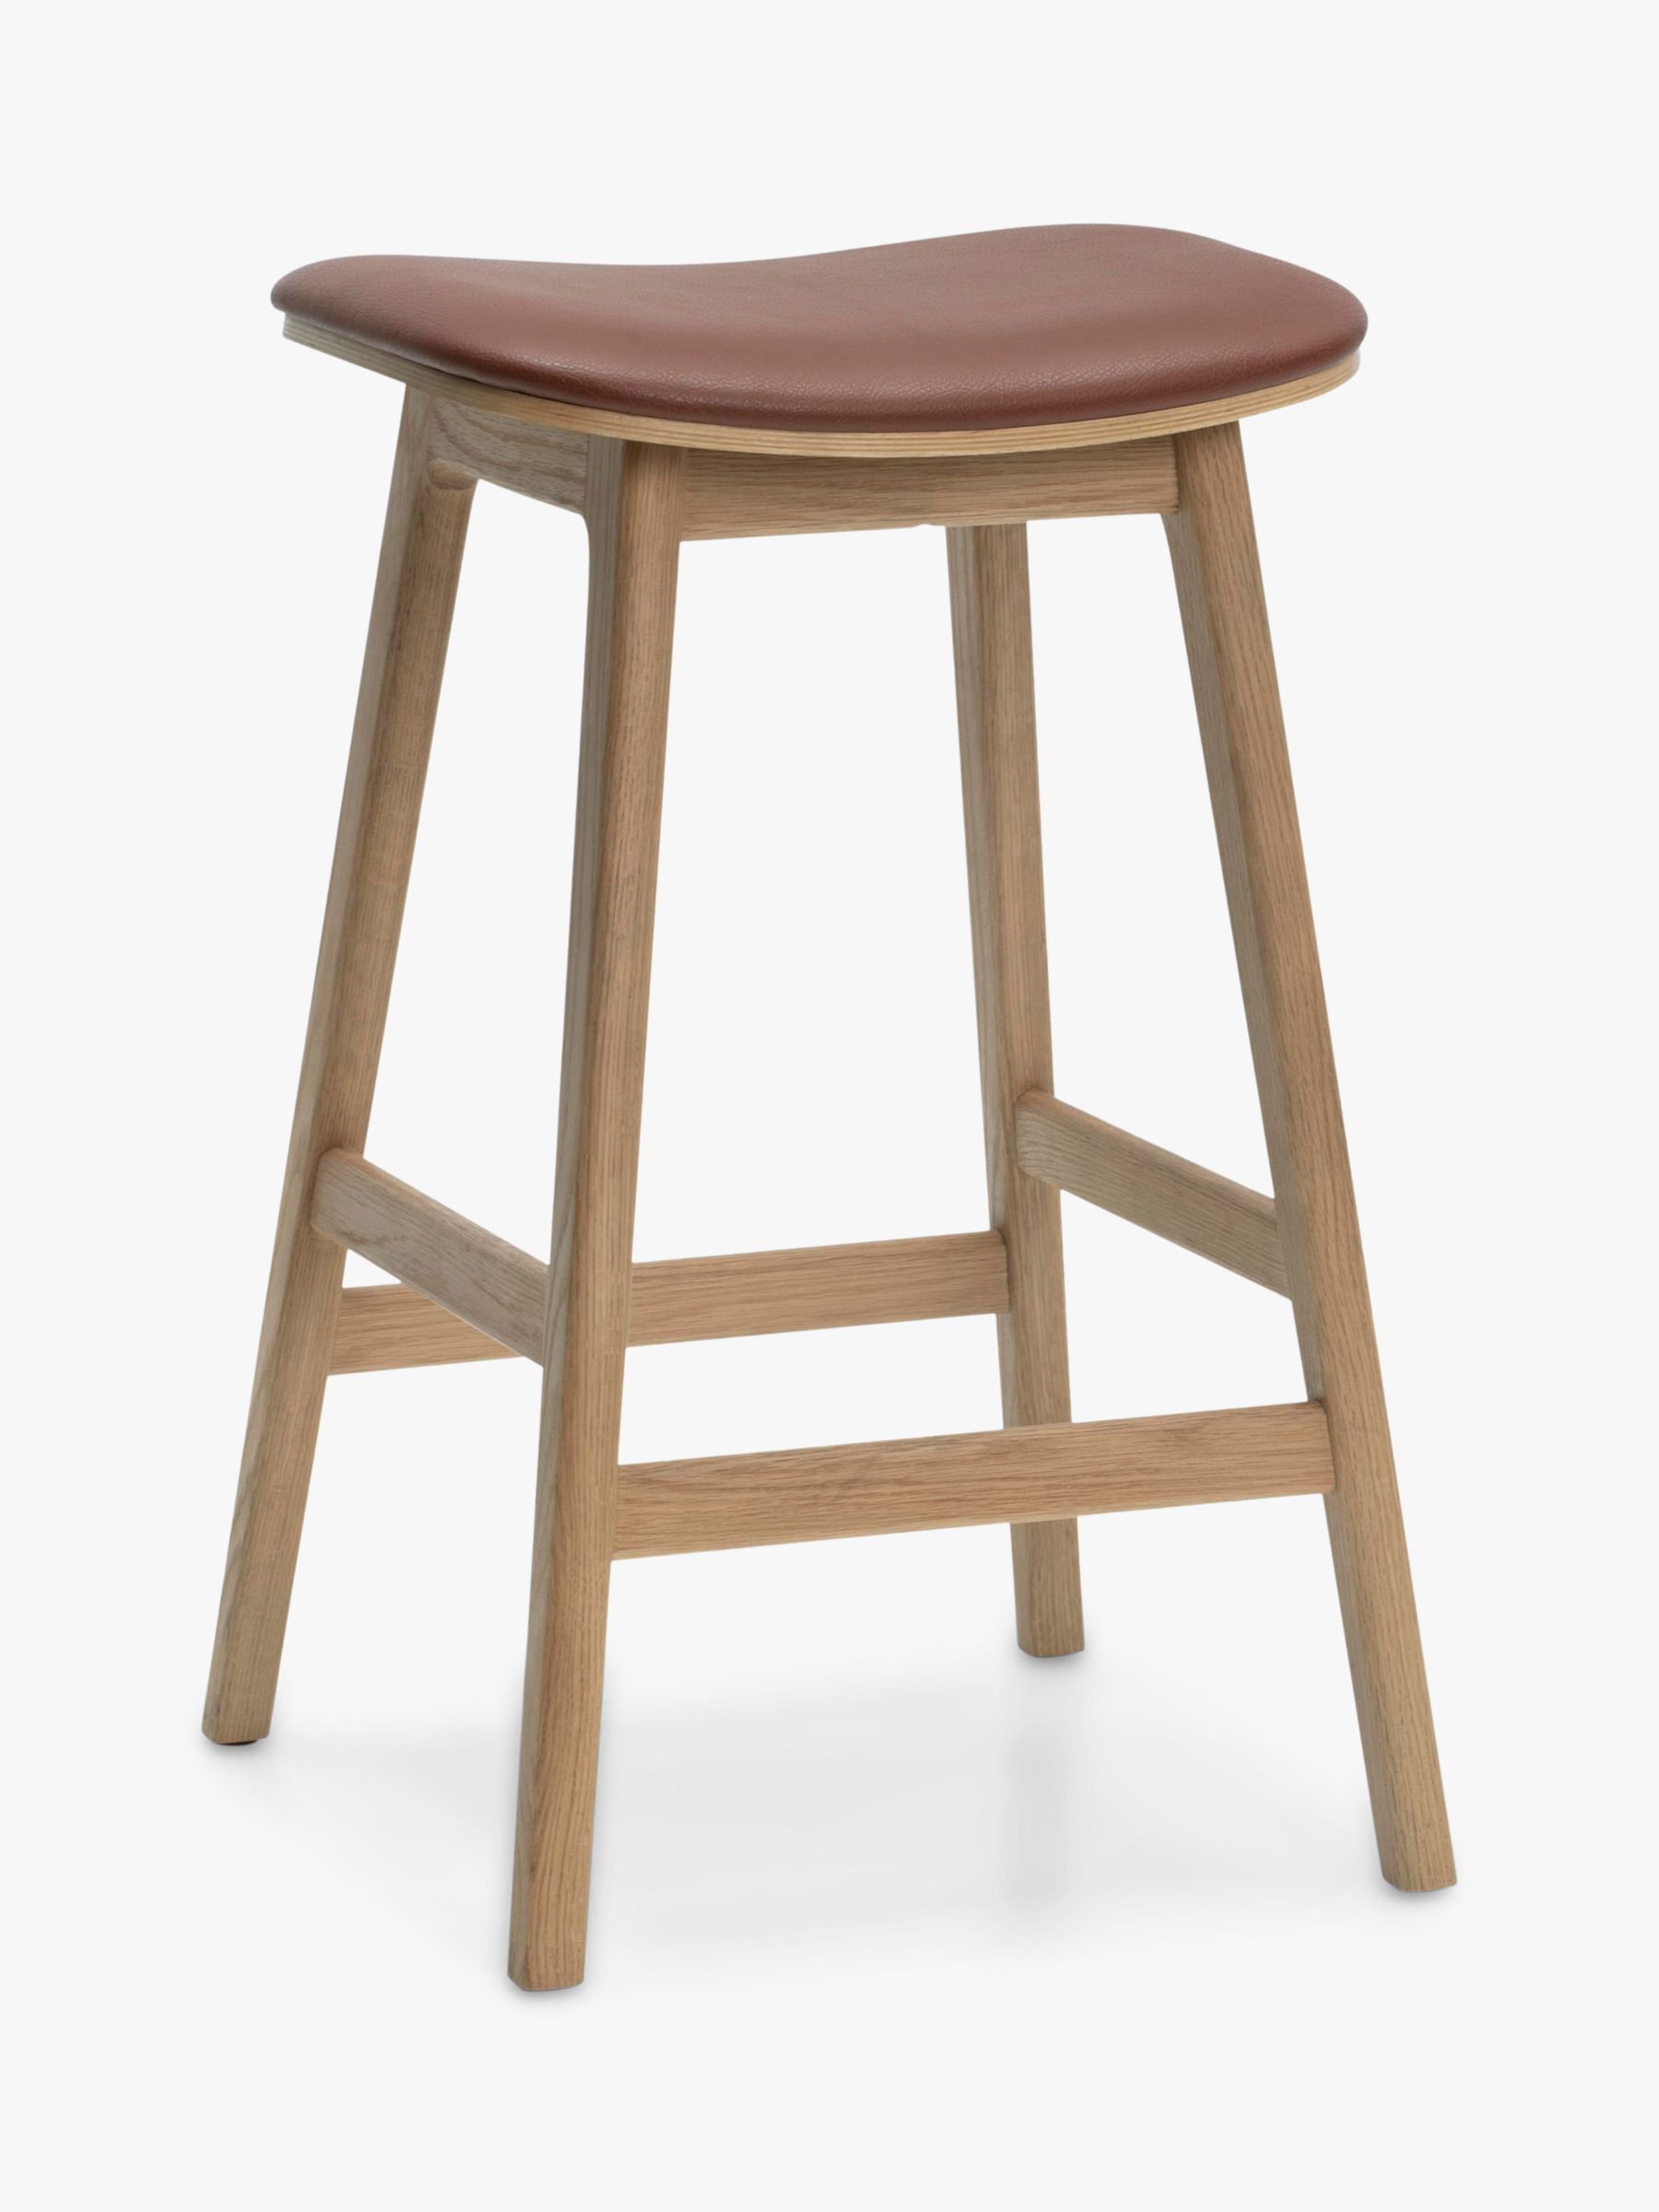 Photo of John lewis santino bar stool